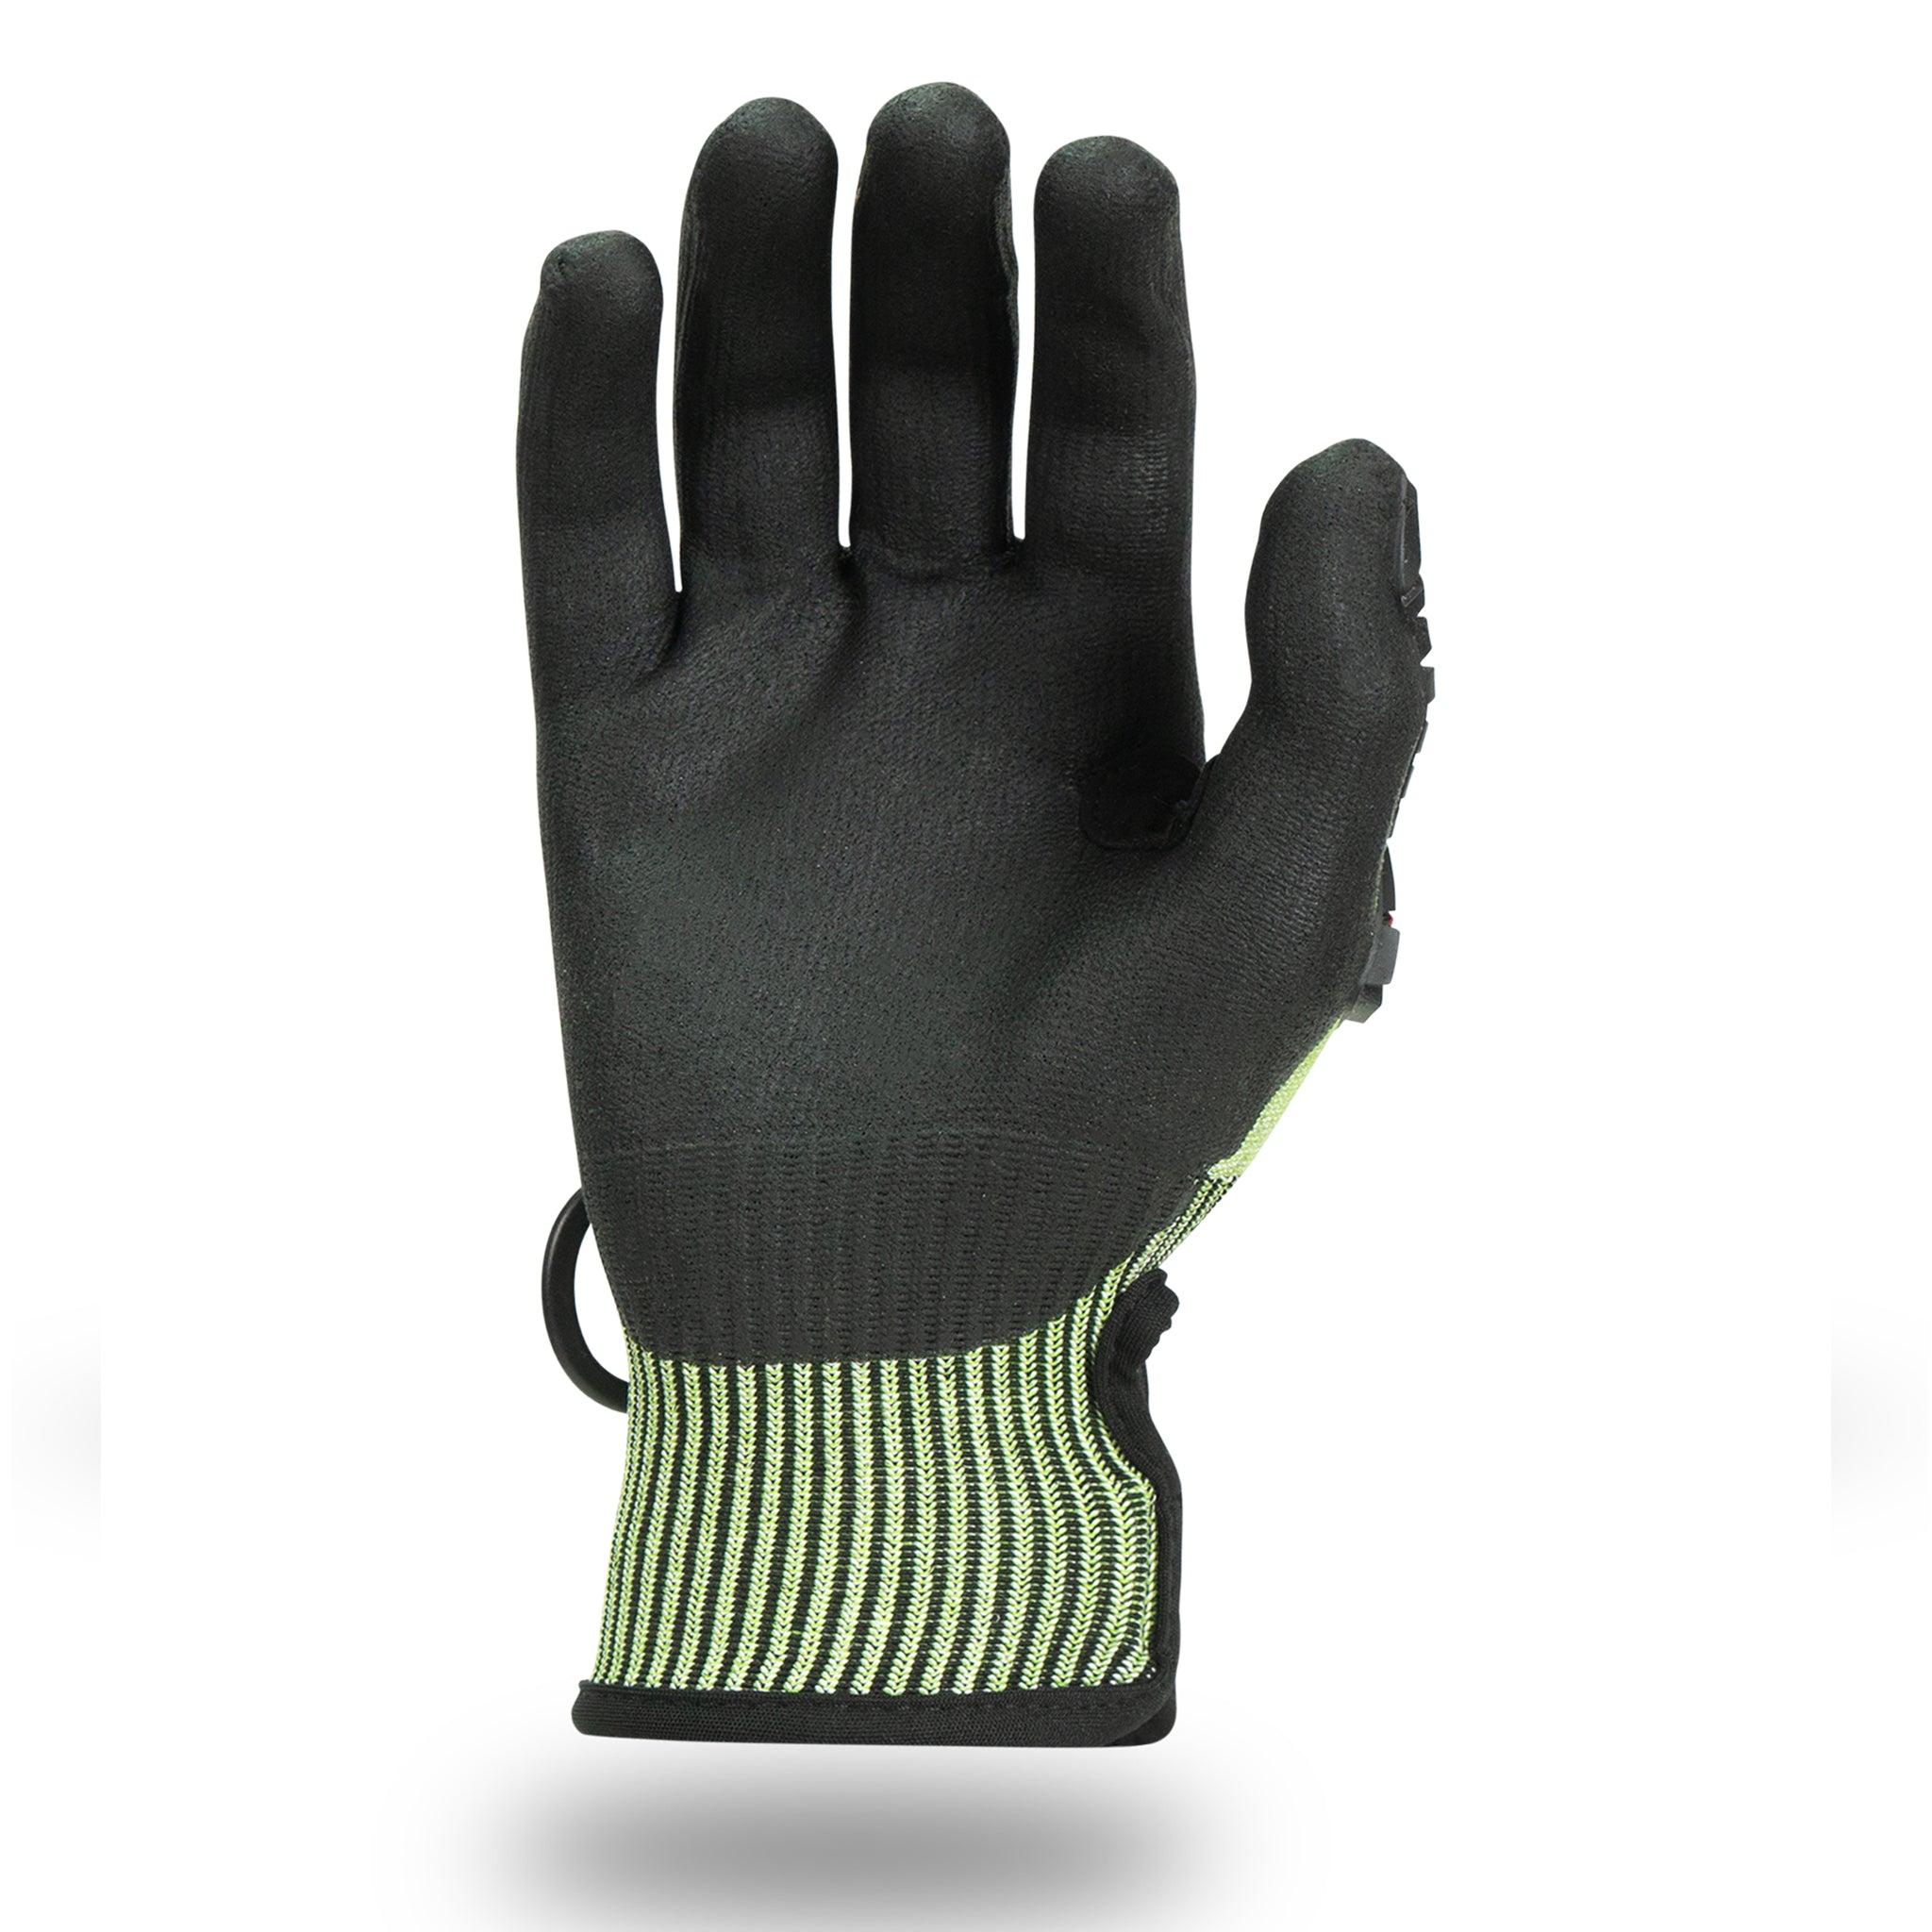 GRIPPS® C5 Eco Impact Gloves - 2.3kg / 5lb